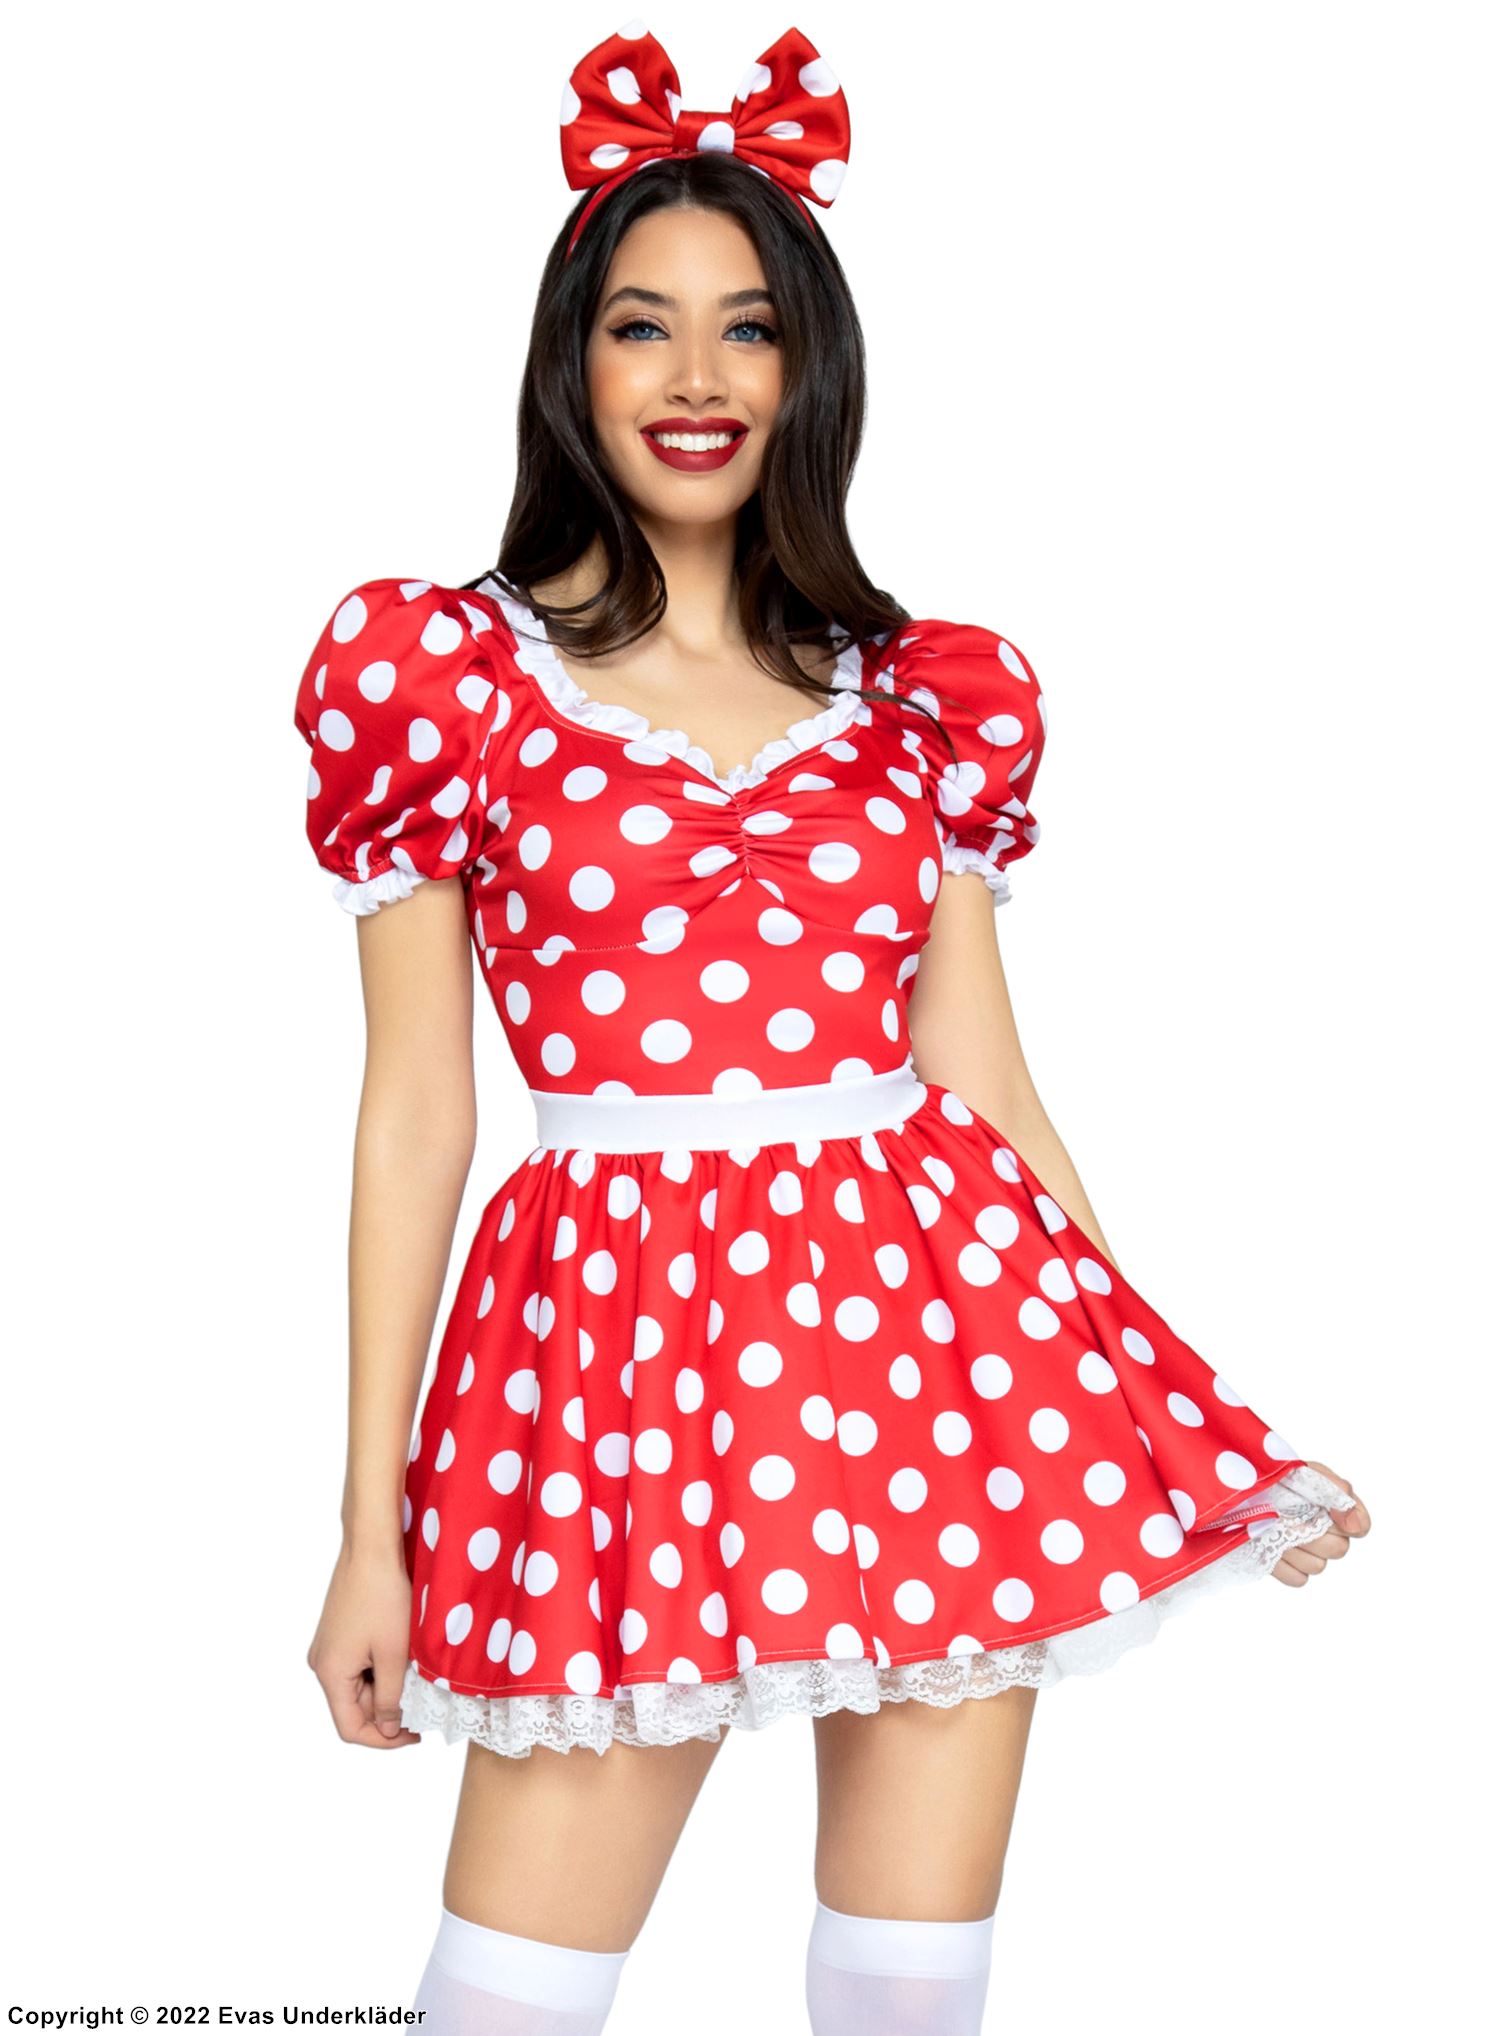 Minnie Mouse, costume dress, big bow, lace edge, puff sleeves, polka dot